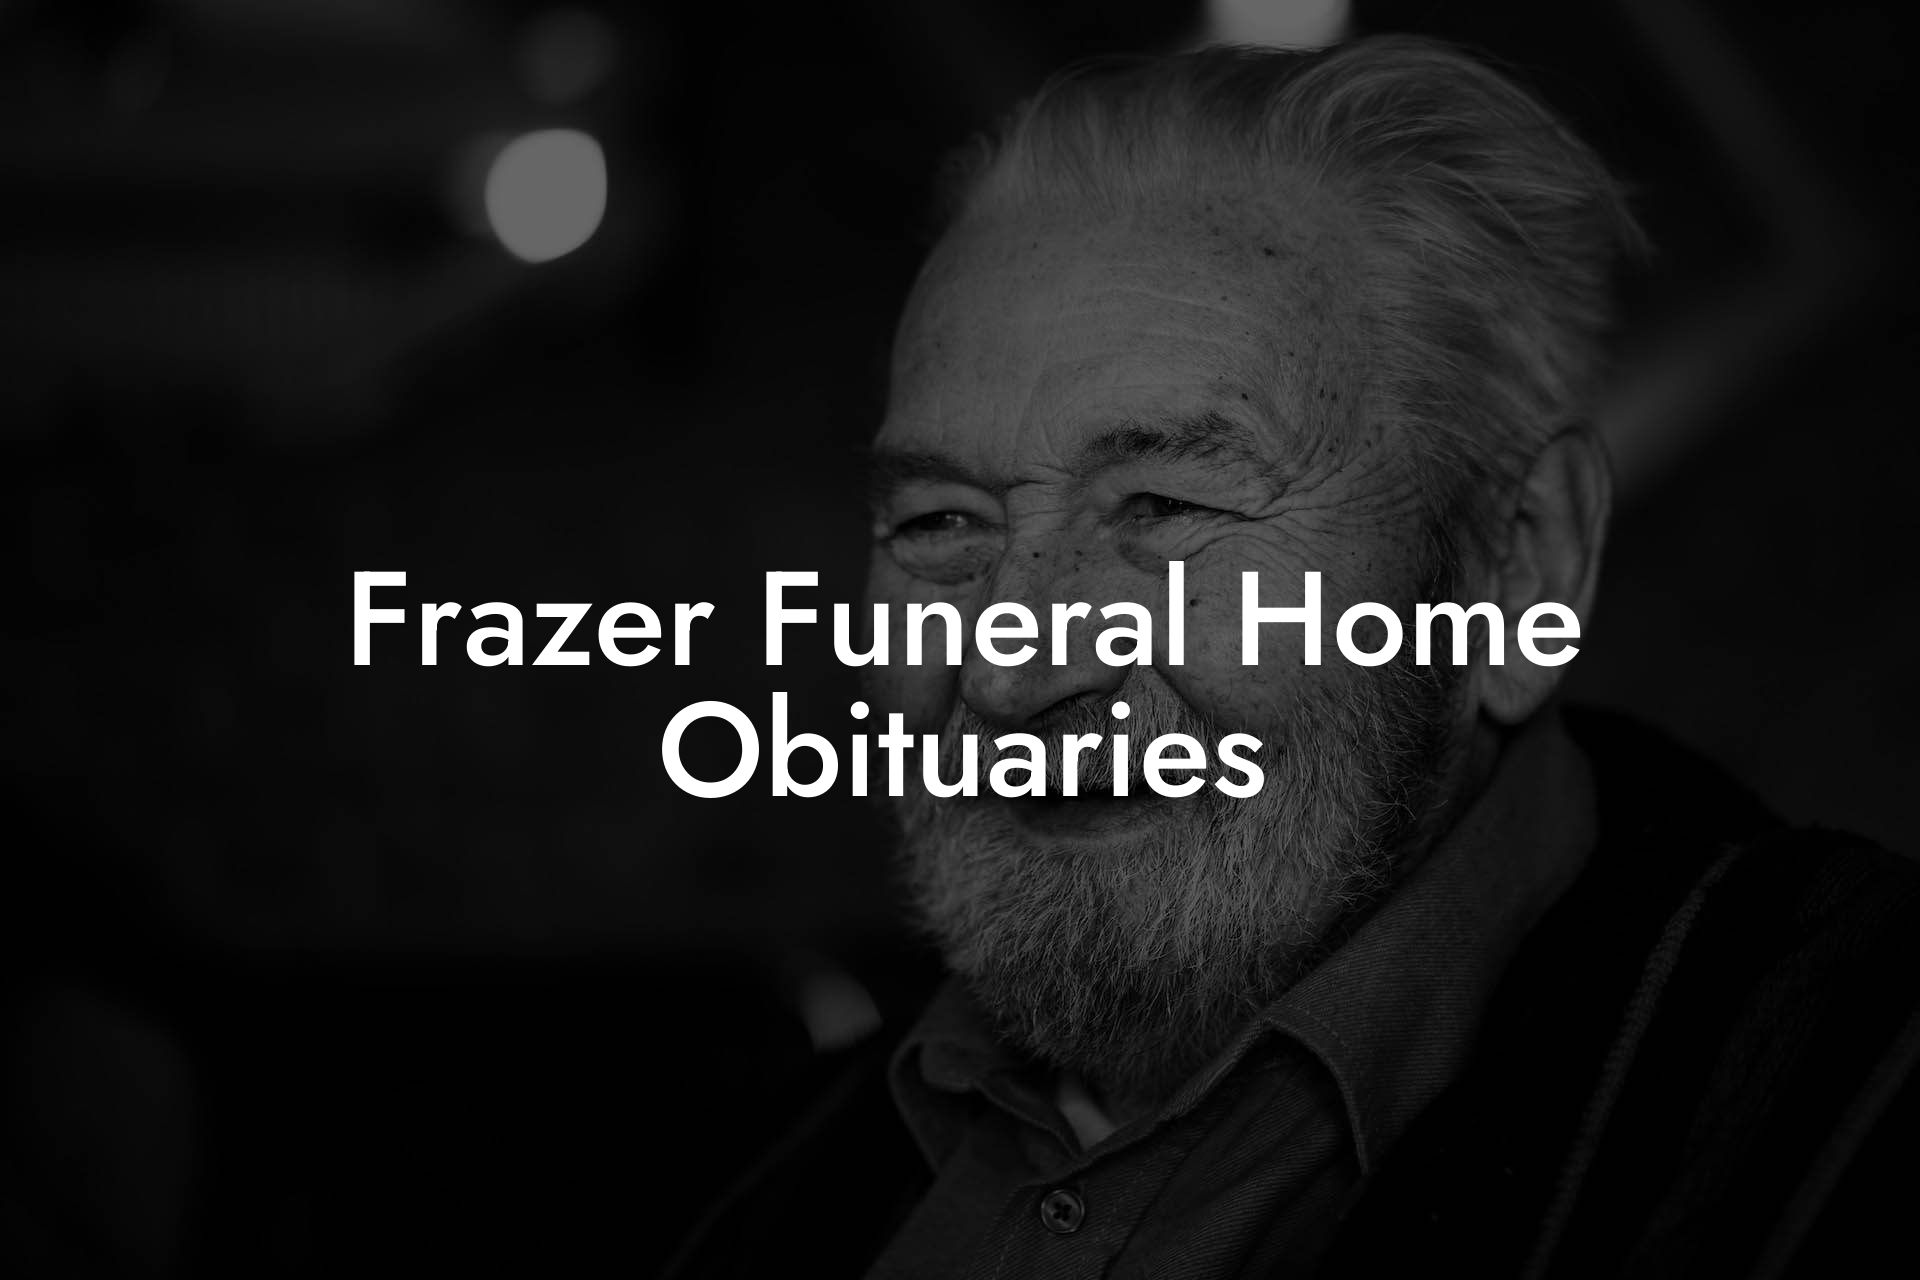 Frazer Funeral Home Obituaries